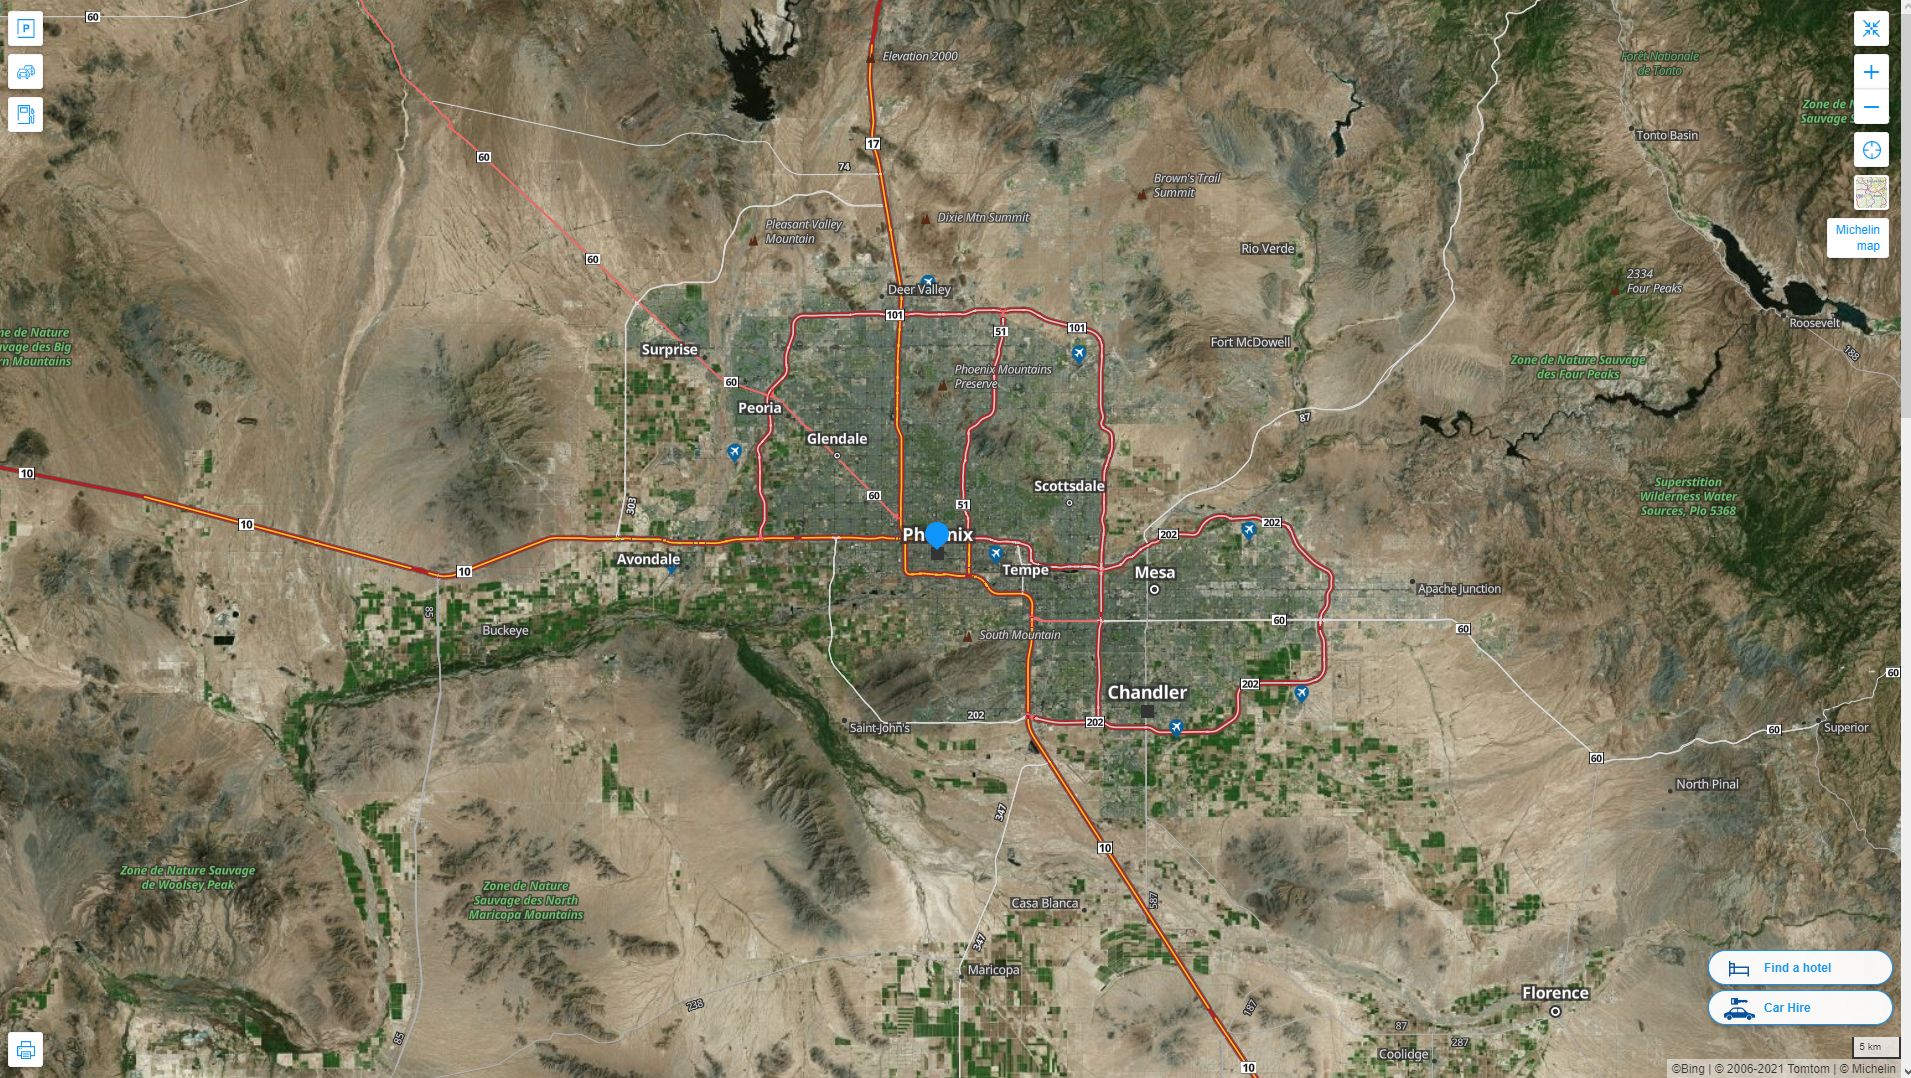 Phoenix Arizona Highway and Road Map with Satellite View